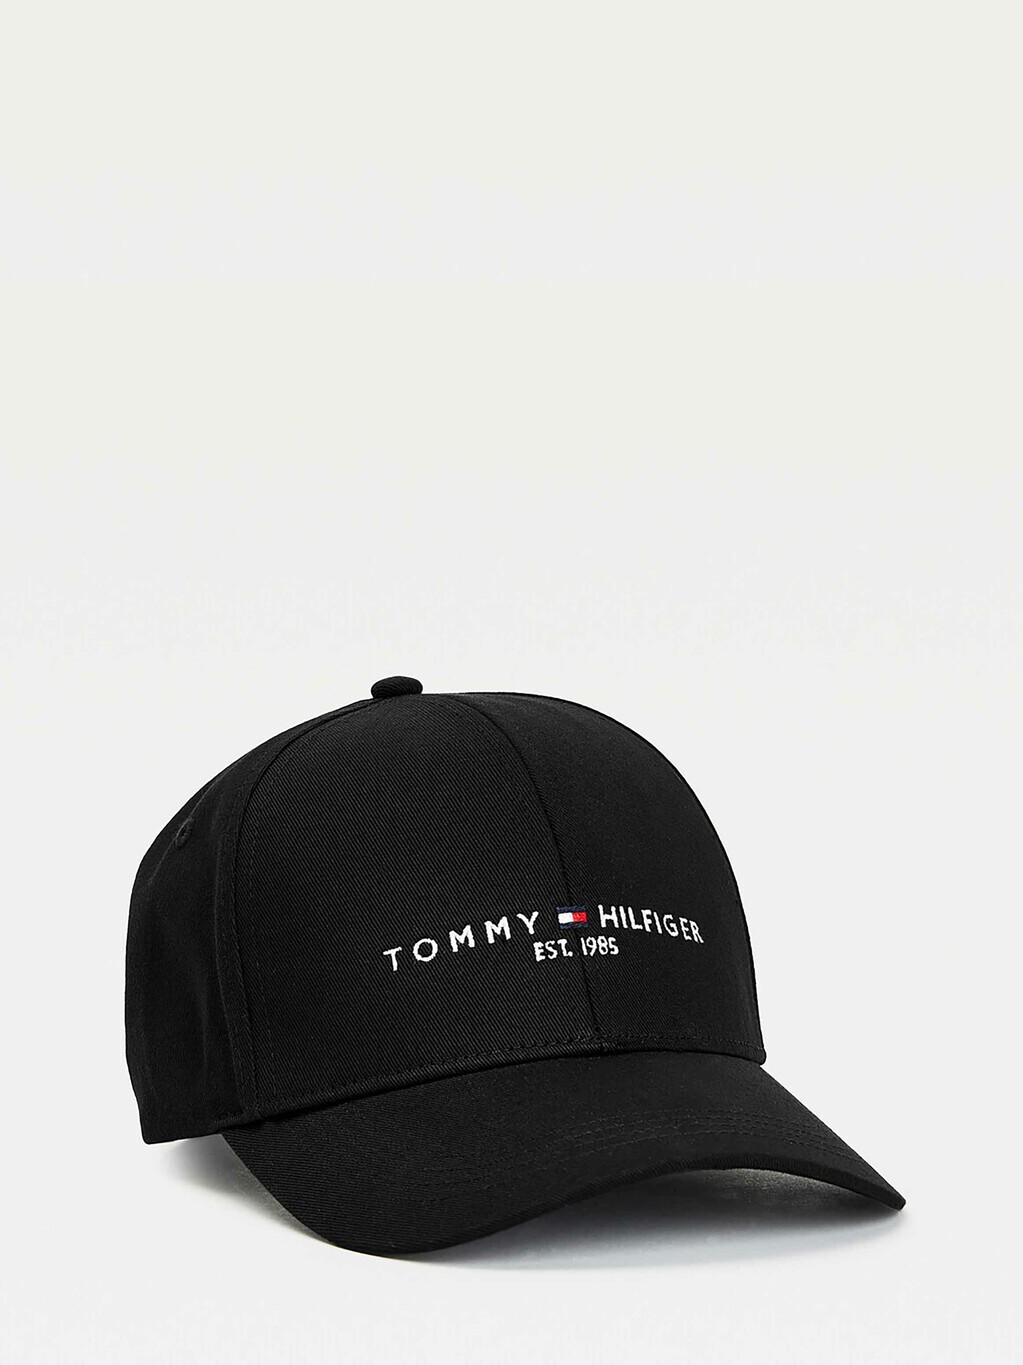 Tommy Hilfiger 經典有機棉棒球帽, Black, hi-res